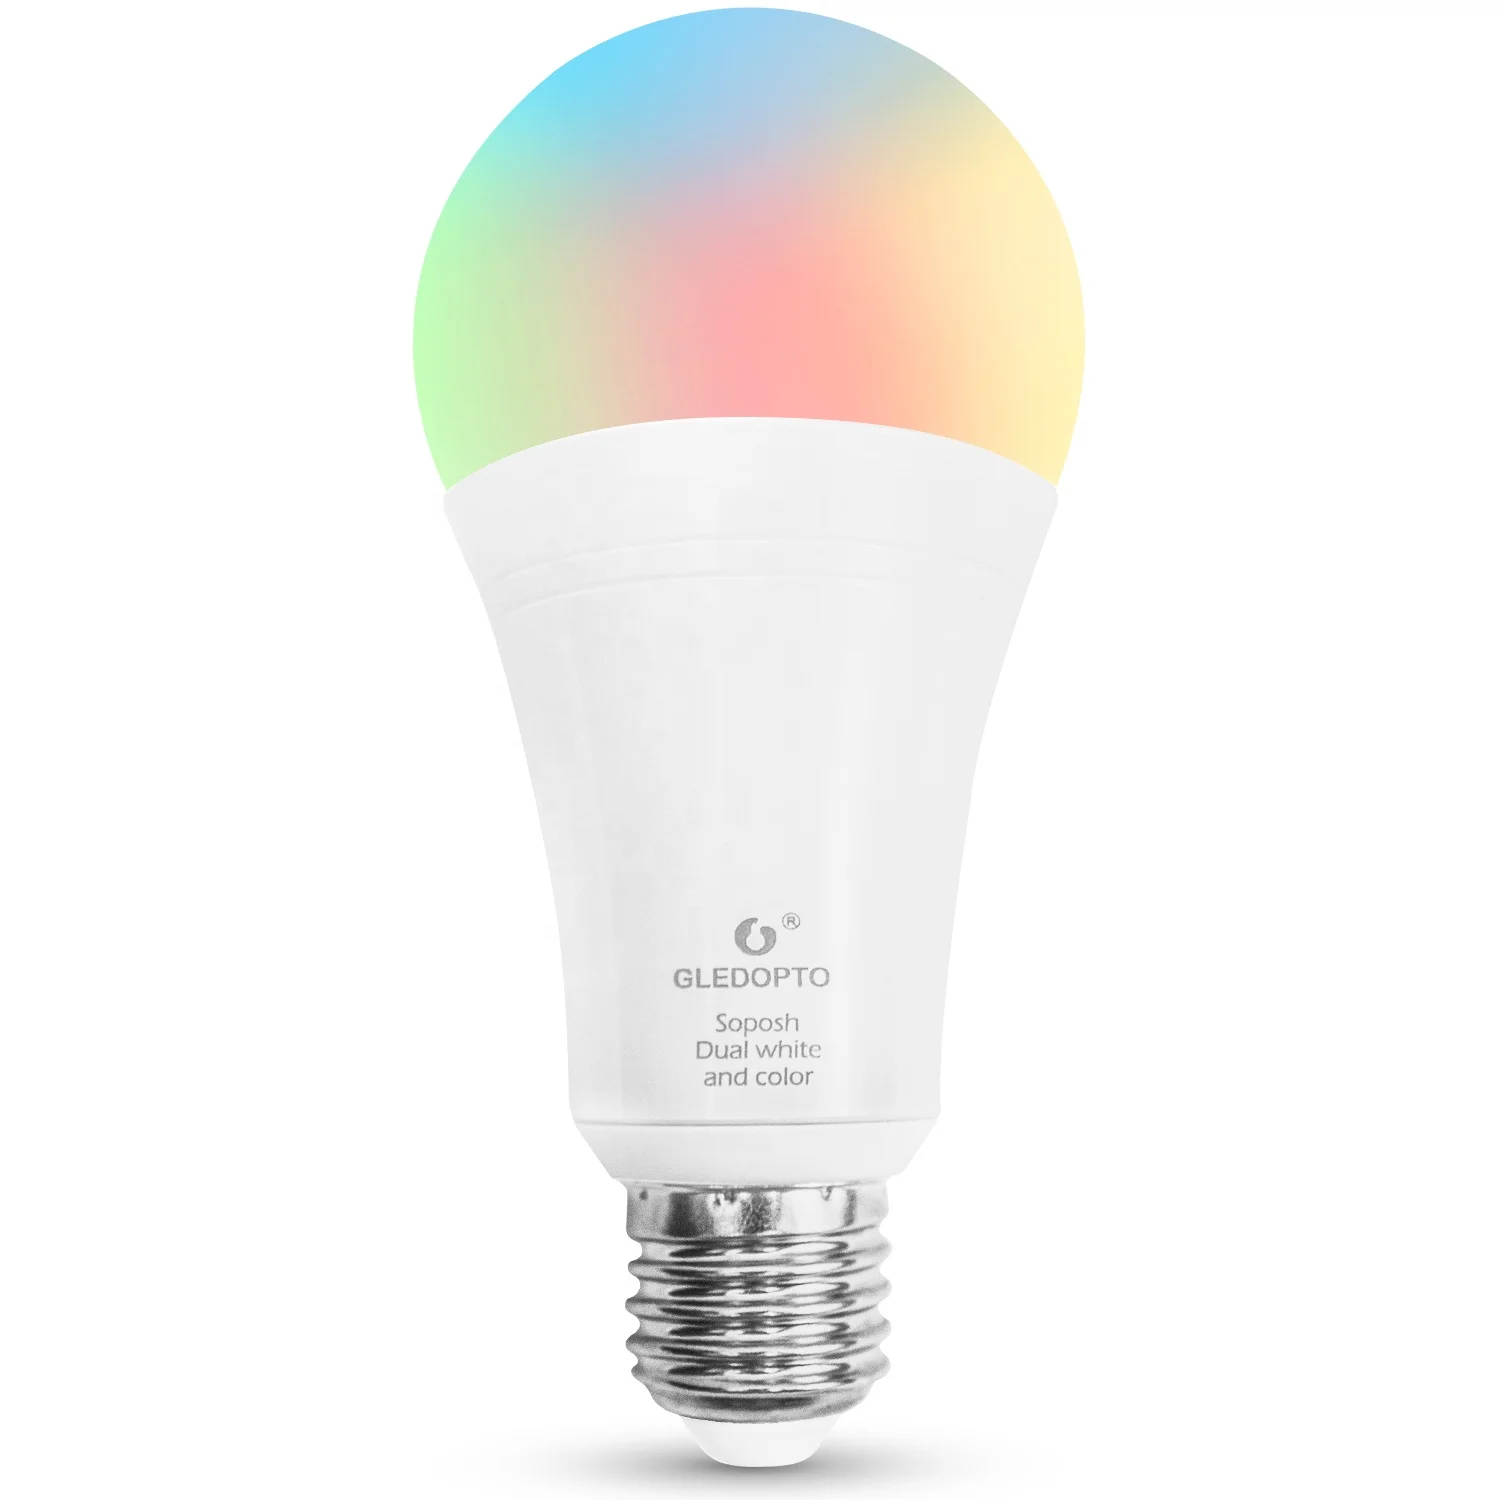 TP Link Smart Bulb LED Light Bulbs Color Changes ON OFF Timer Controlled Alexa Google Home App Controlling LED Christmas Lights